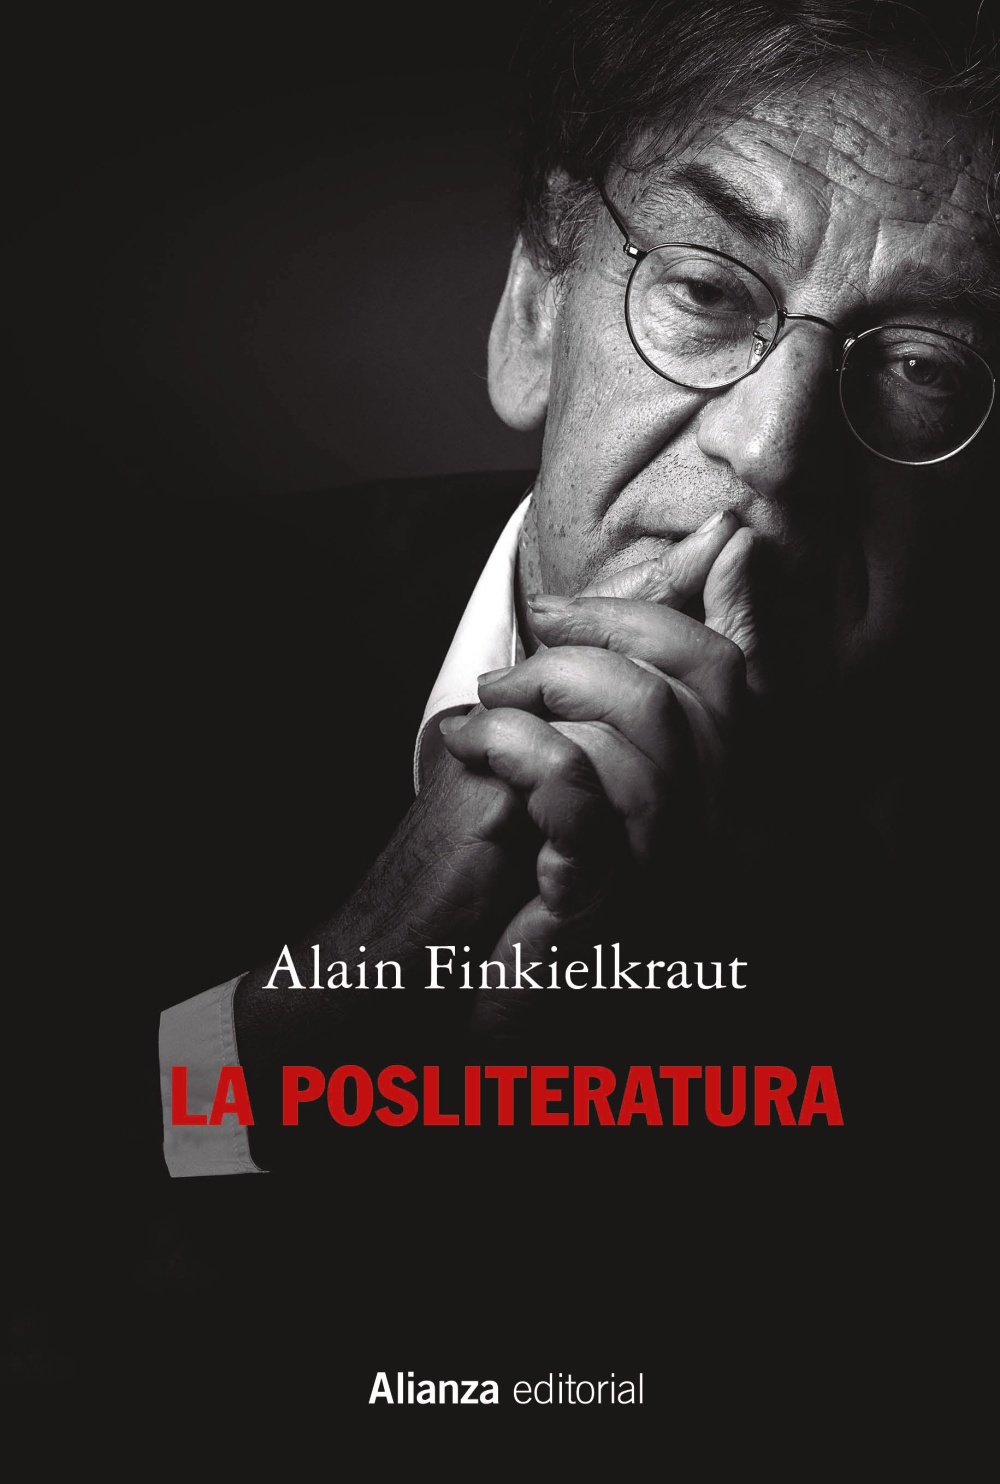 La posliteratura, de Alain Finkielkraut